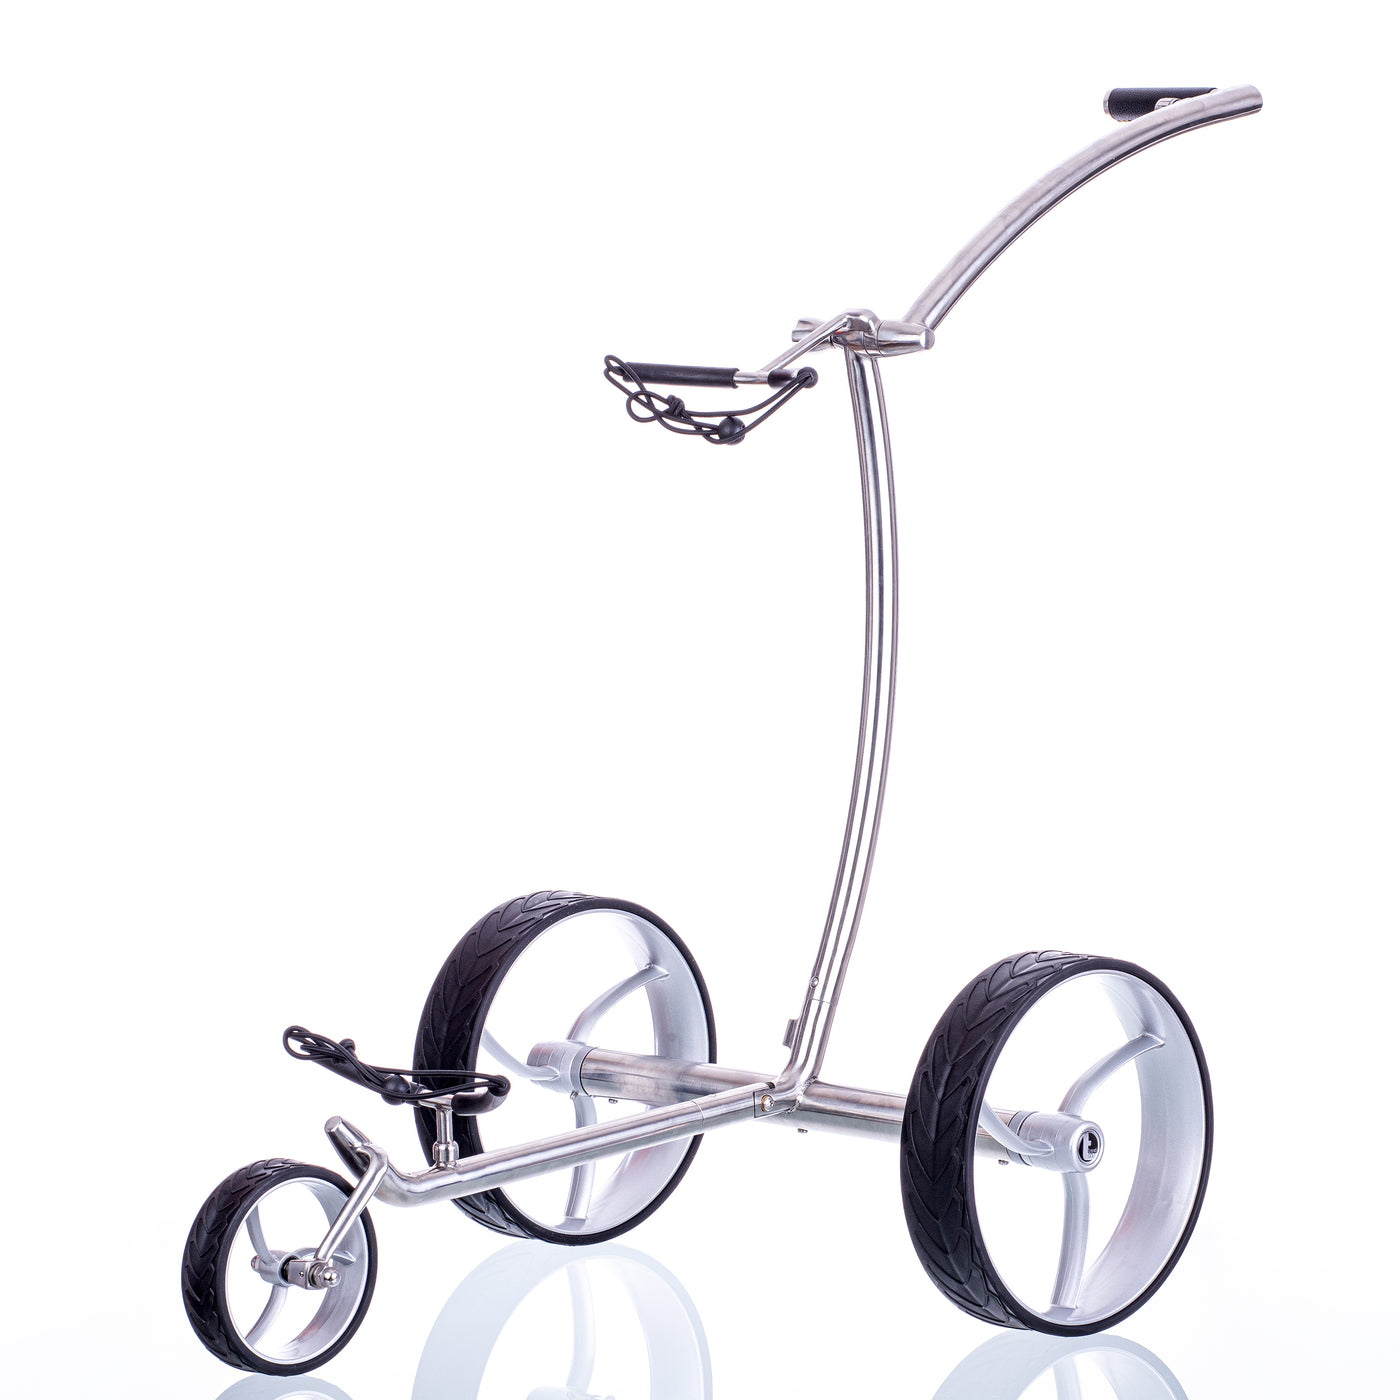 Trendgolf electric trolley walker model 2023 stainless steel, polished